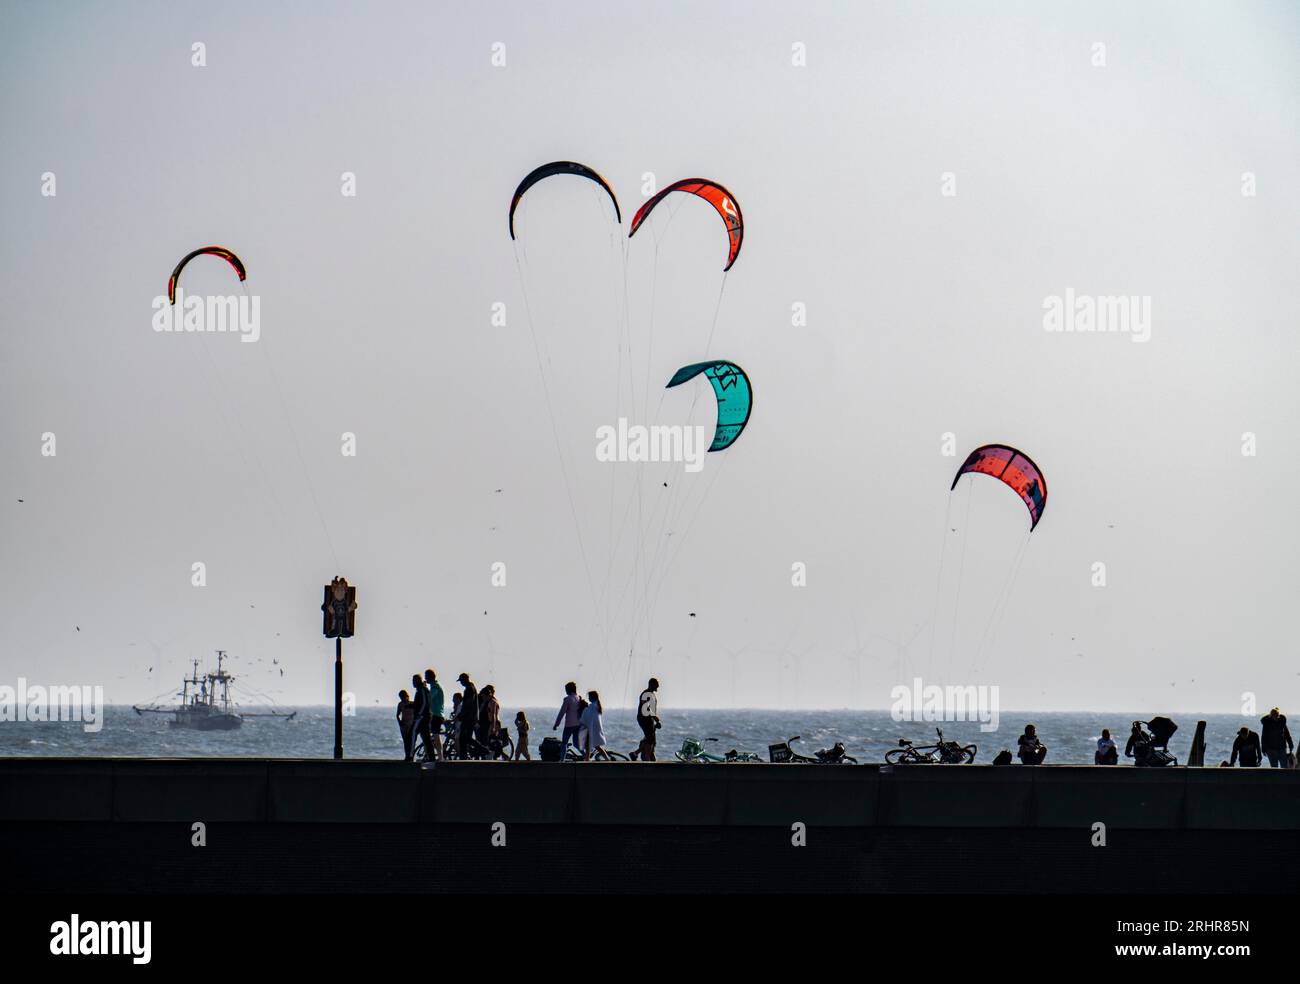 Kitesurfers off the coast of Scheveningen, strollers on the pier, The Hague, Netherlands Stock Photo